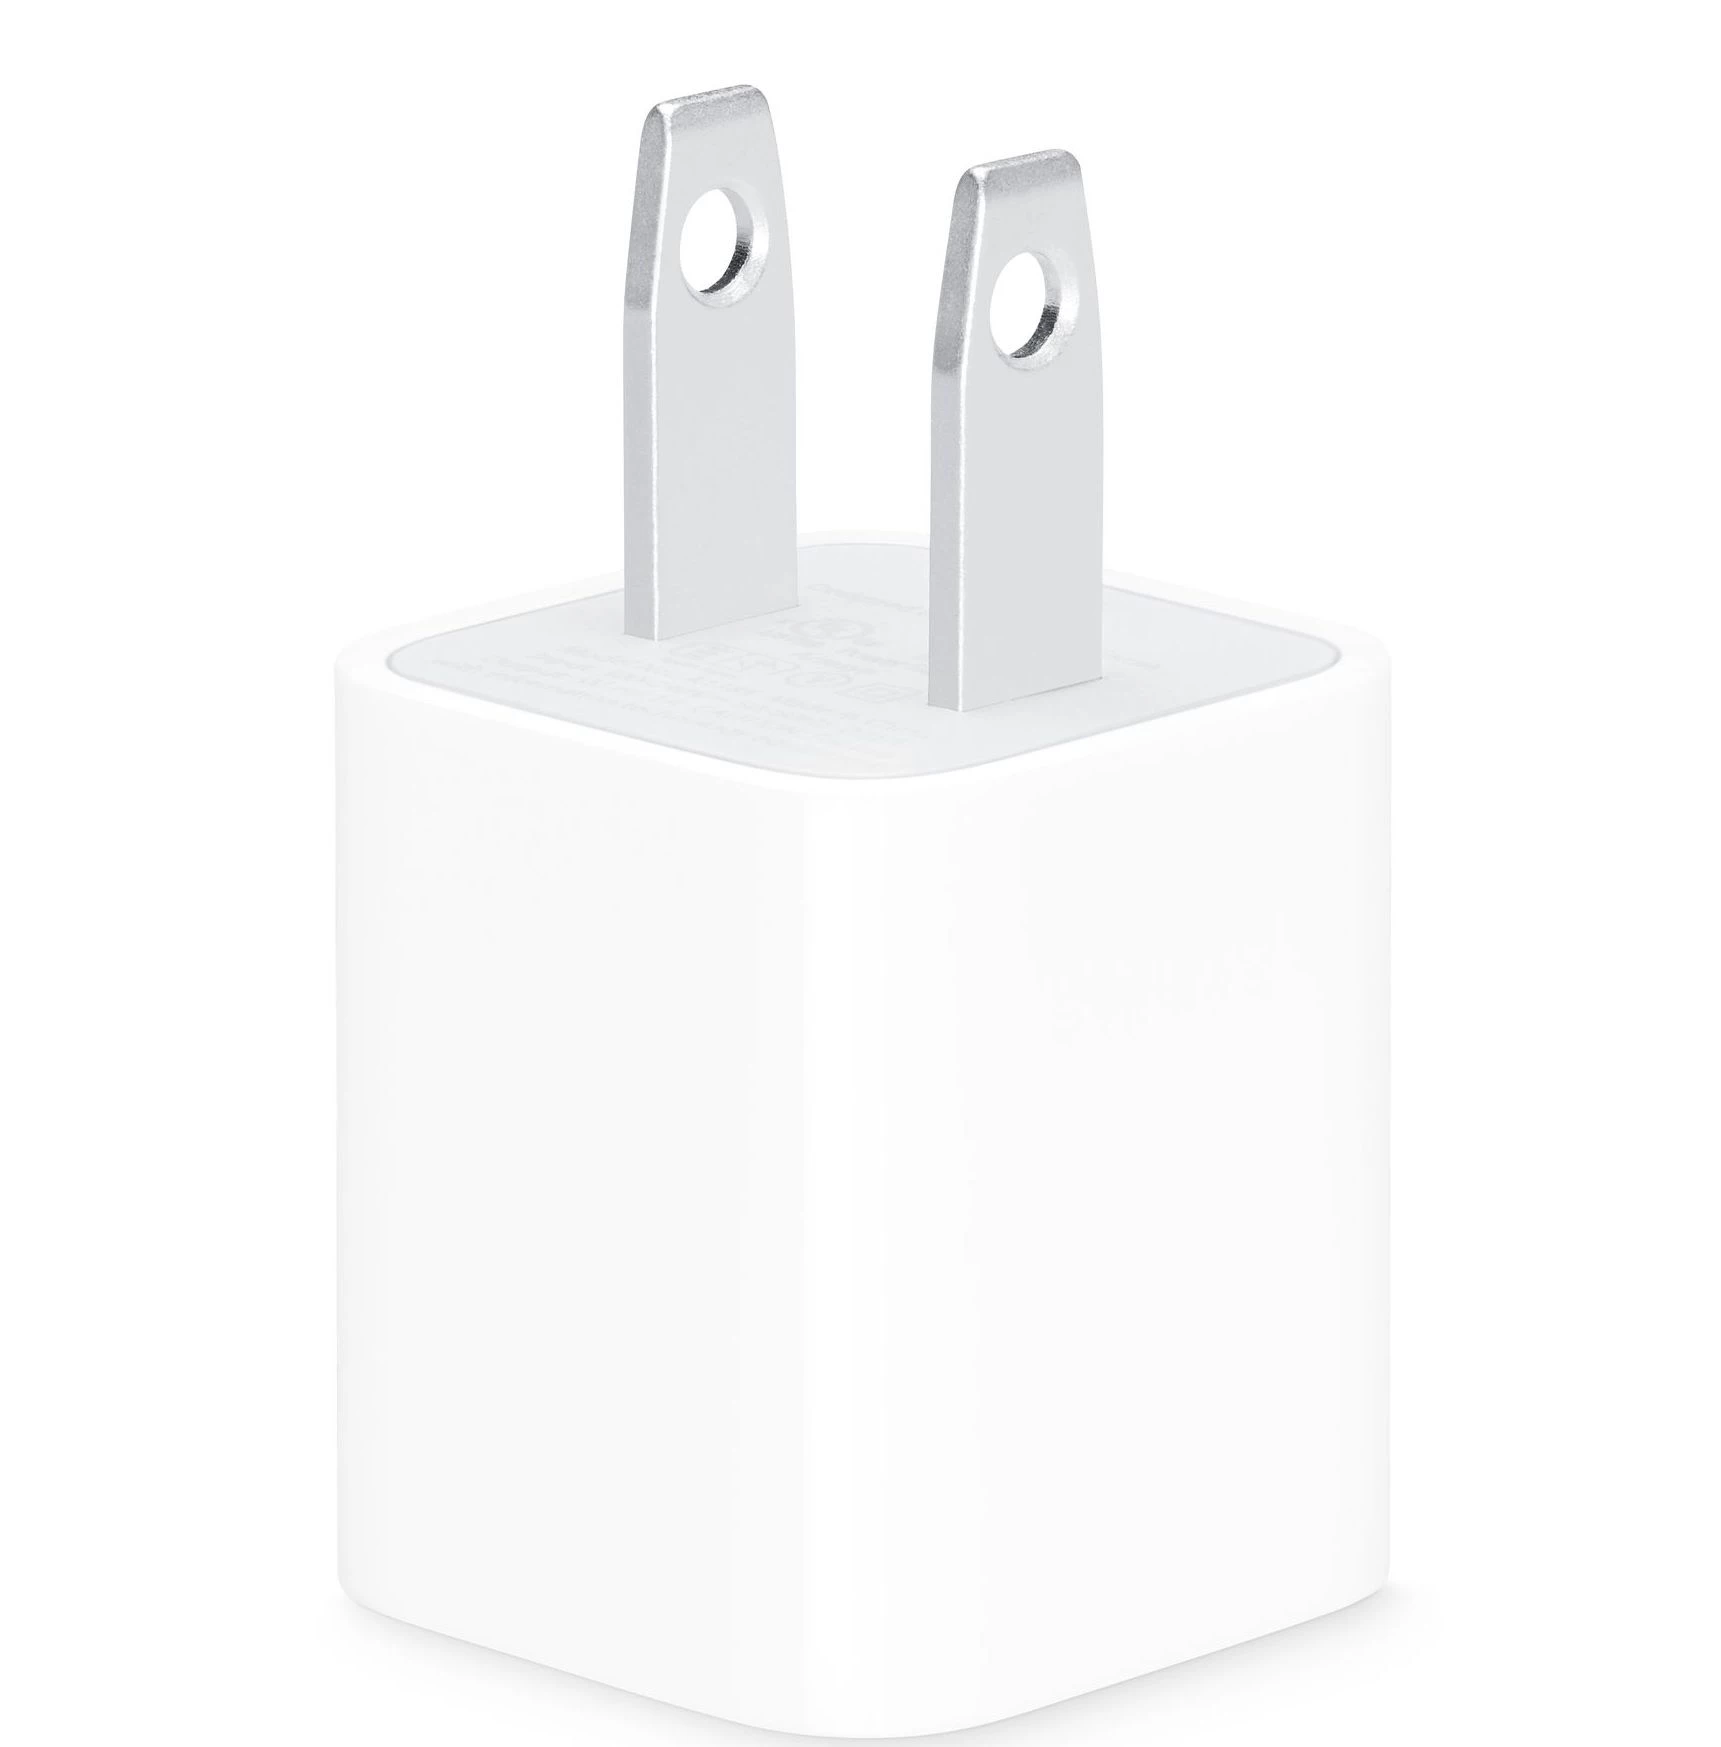 Apple 5W USB Power Adapter (MD810) USA - NO BOX